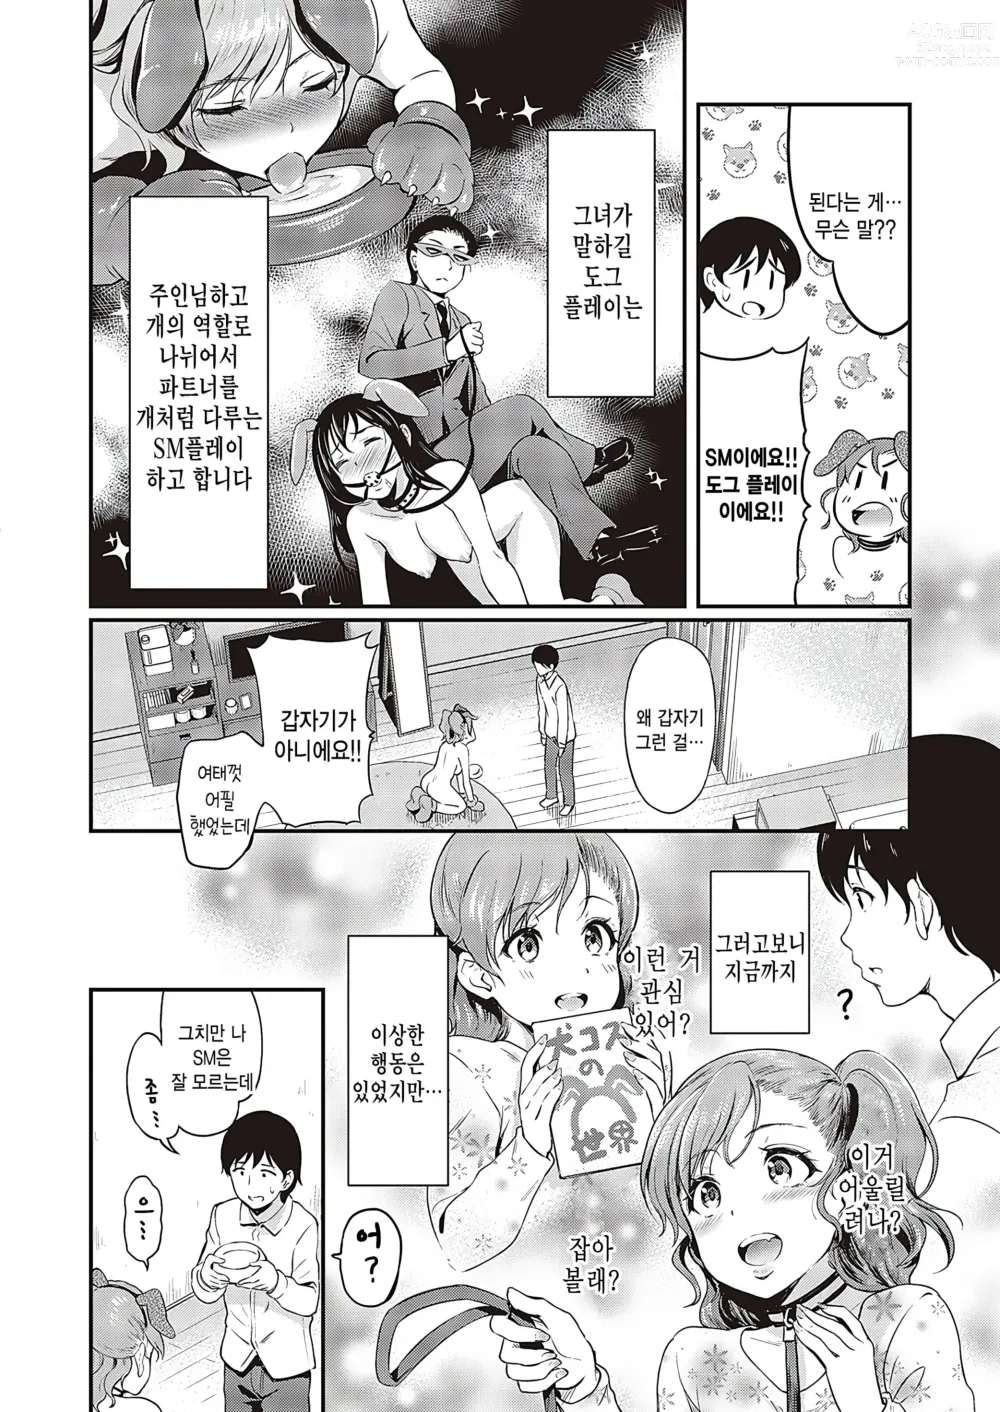 Page 2 of manga Katte Kudasai!